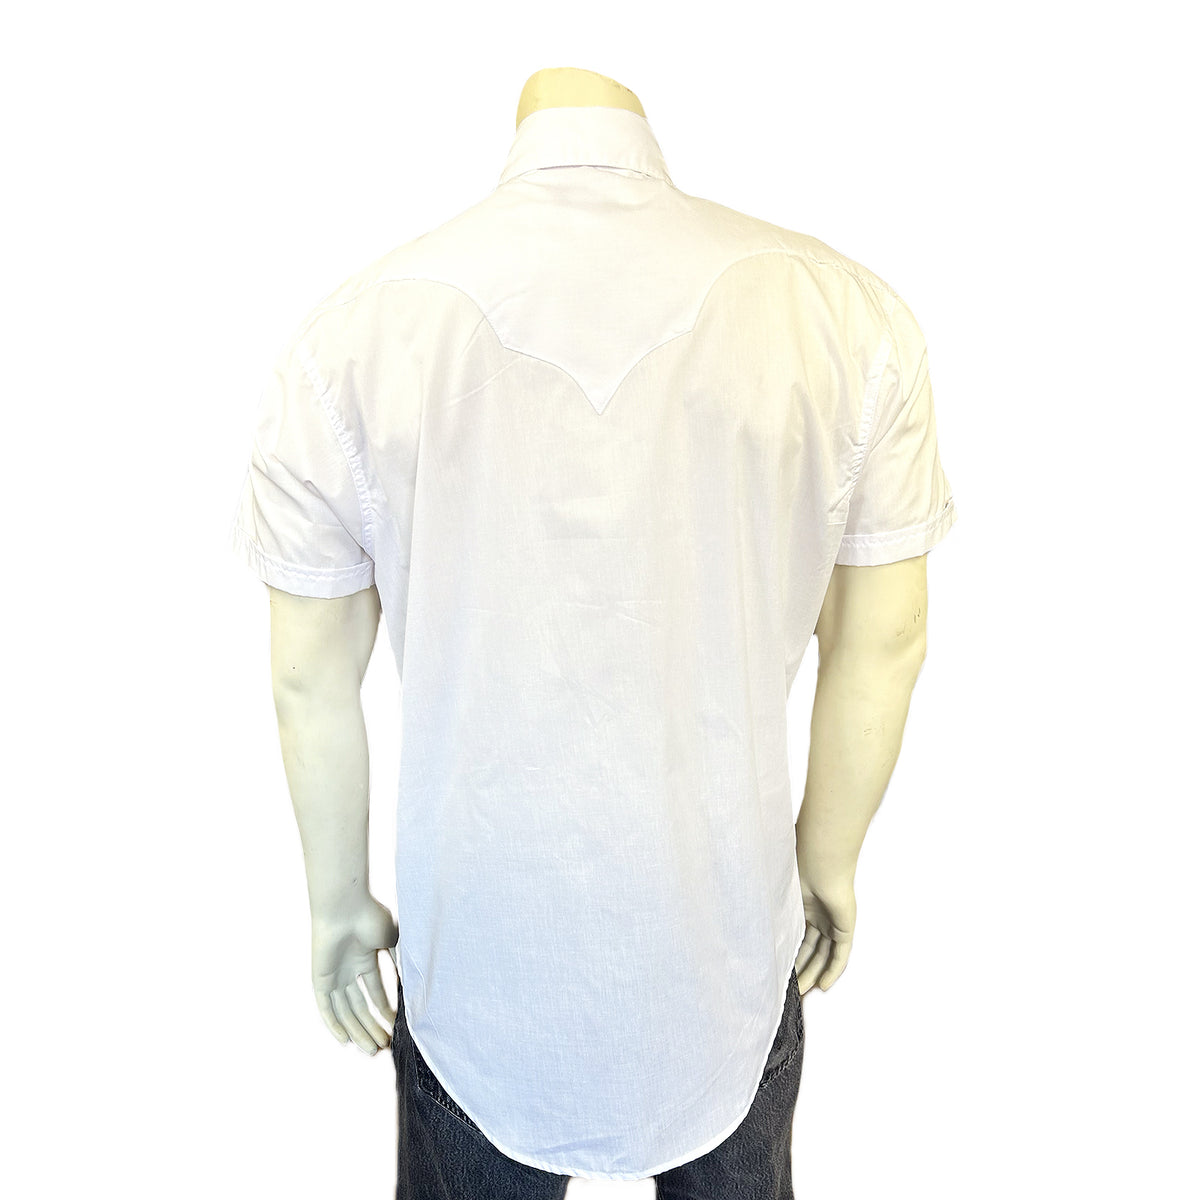 Men's Solid White Cotton Blend Short Sleeve Western Shirt